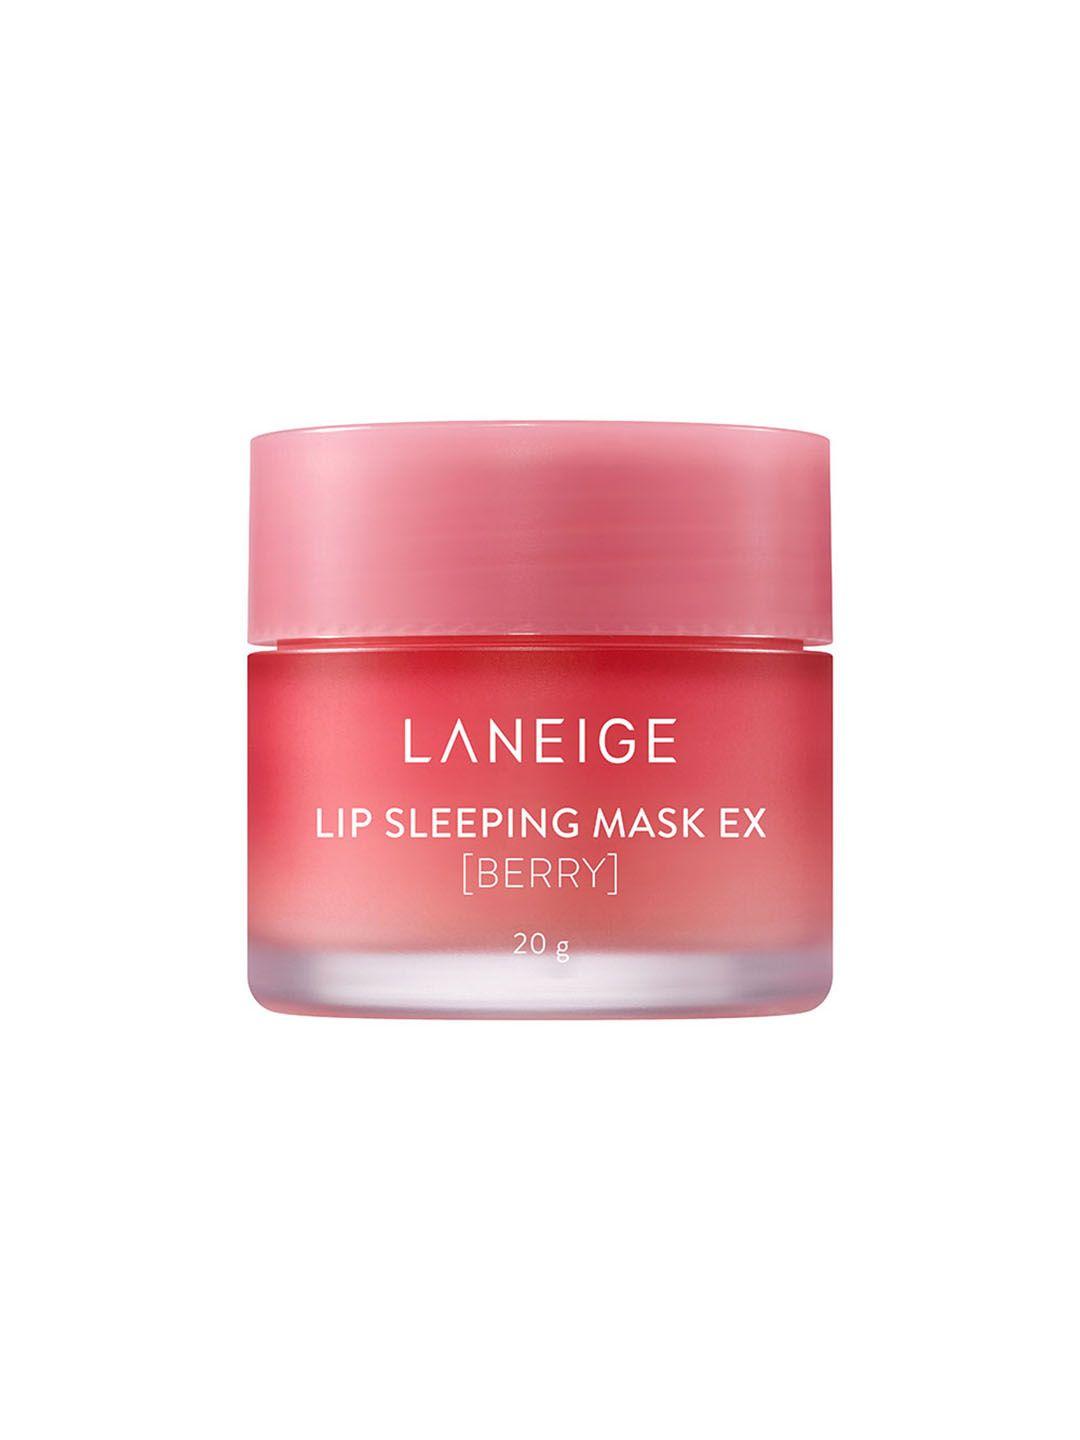 laneige lip sleeping mask ex 20 g - berry